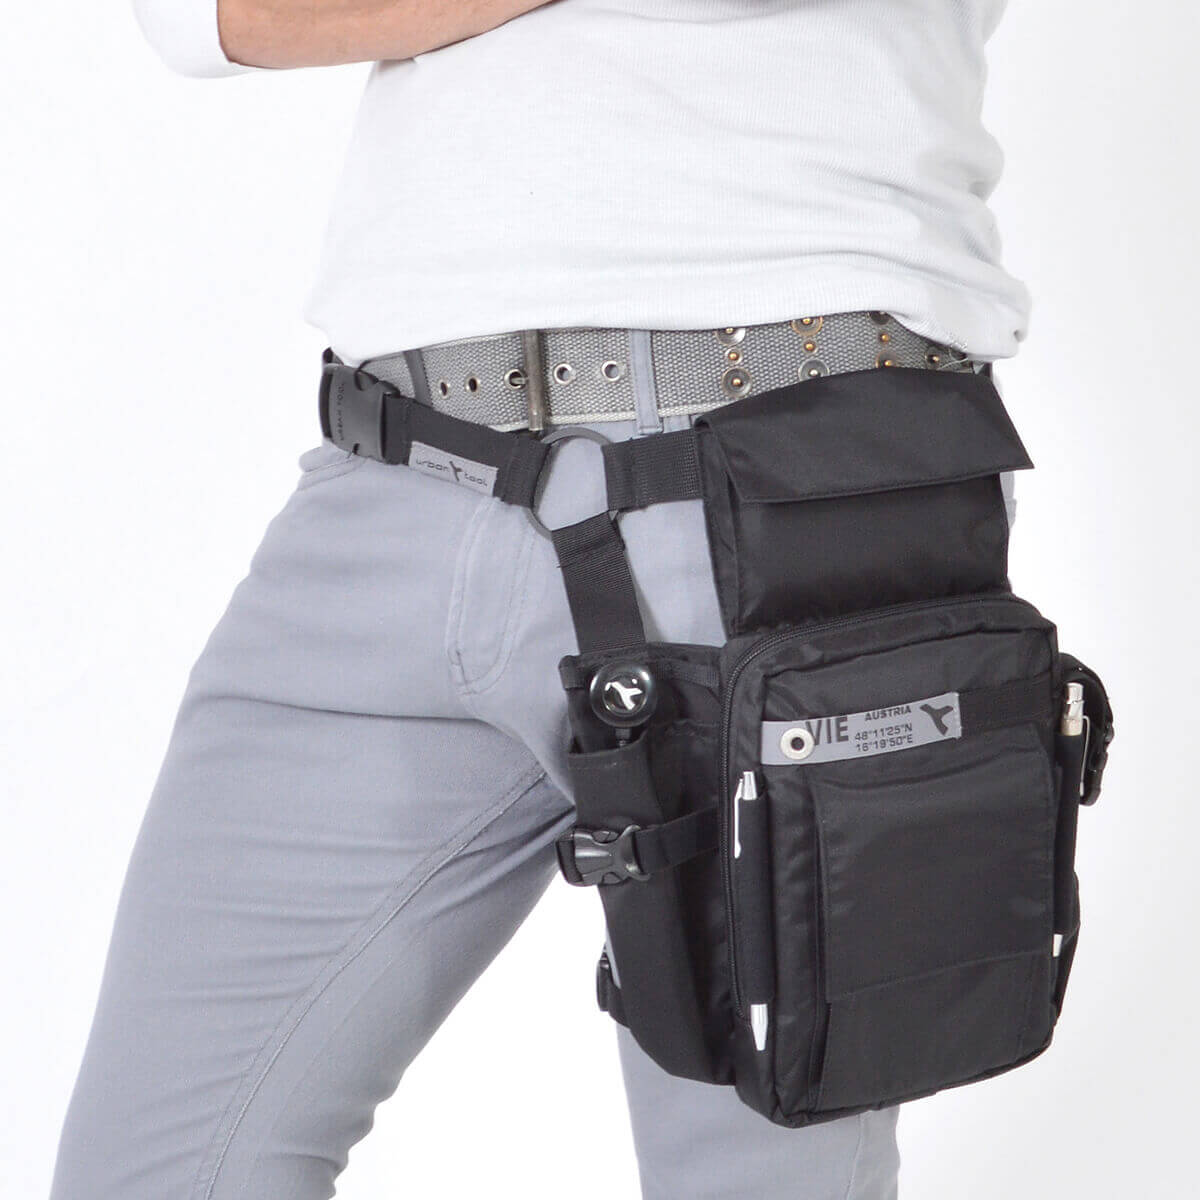 Gadget carry holster fits 7-8 tablets, 6 smartphones, wallet, passport -  travel legHolster